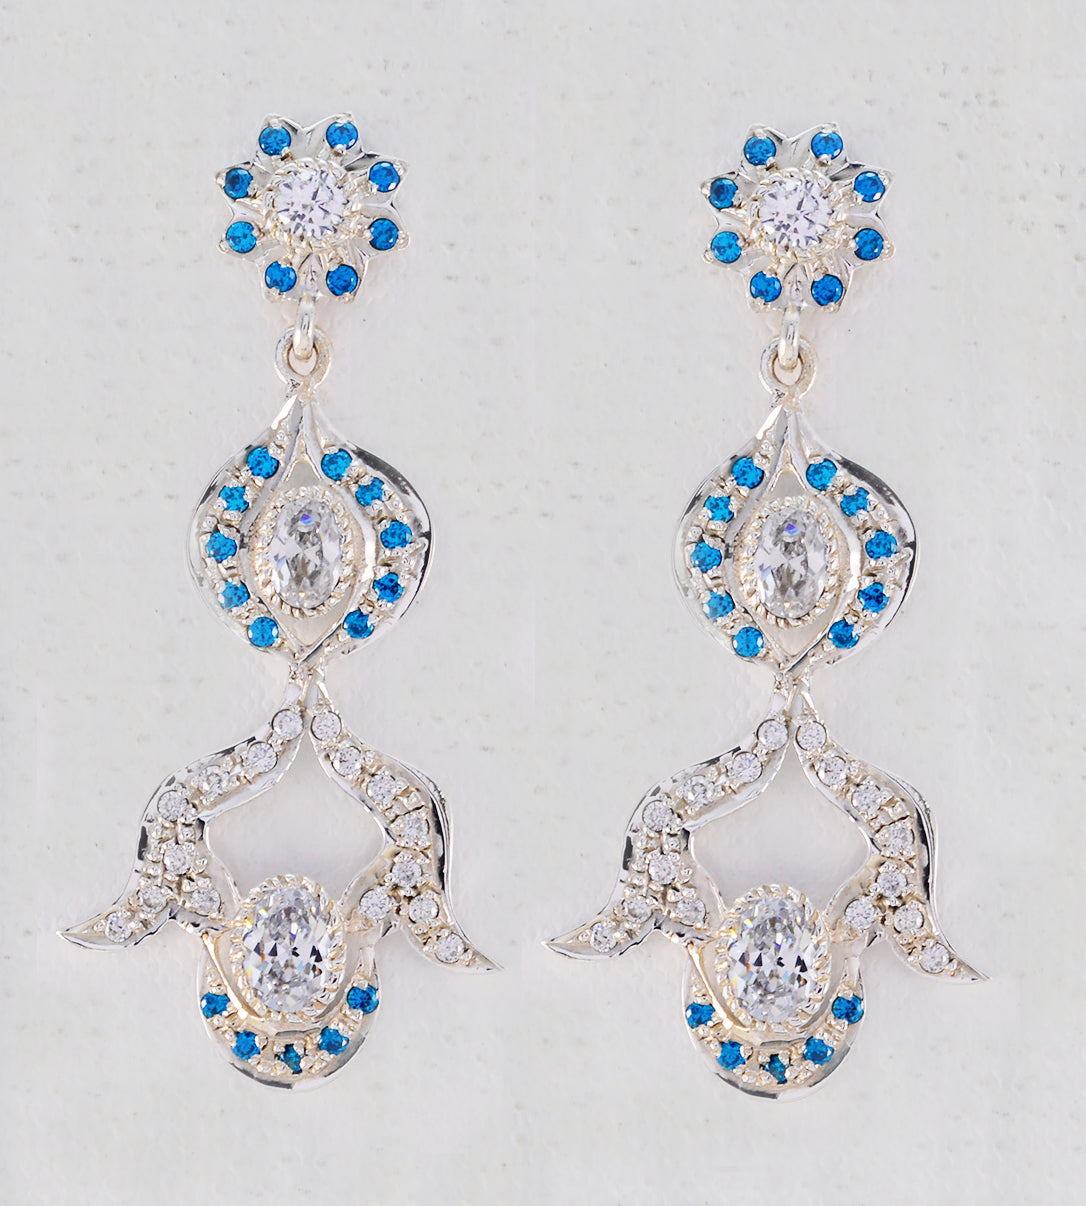 Riyo Real Gemstones multi shape Faceted Multi Multi CZ Silver Earrings graduation gift